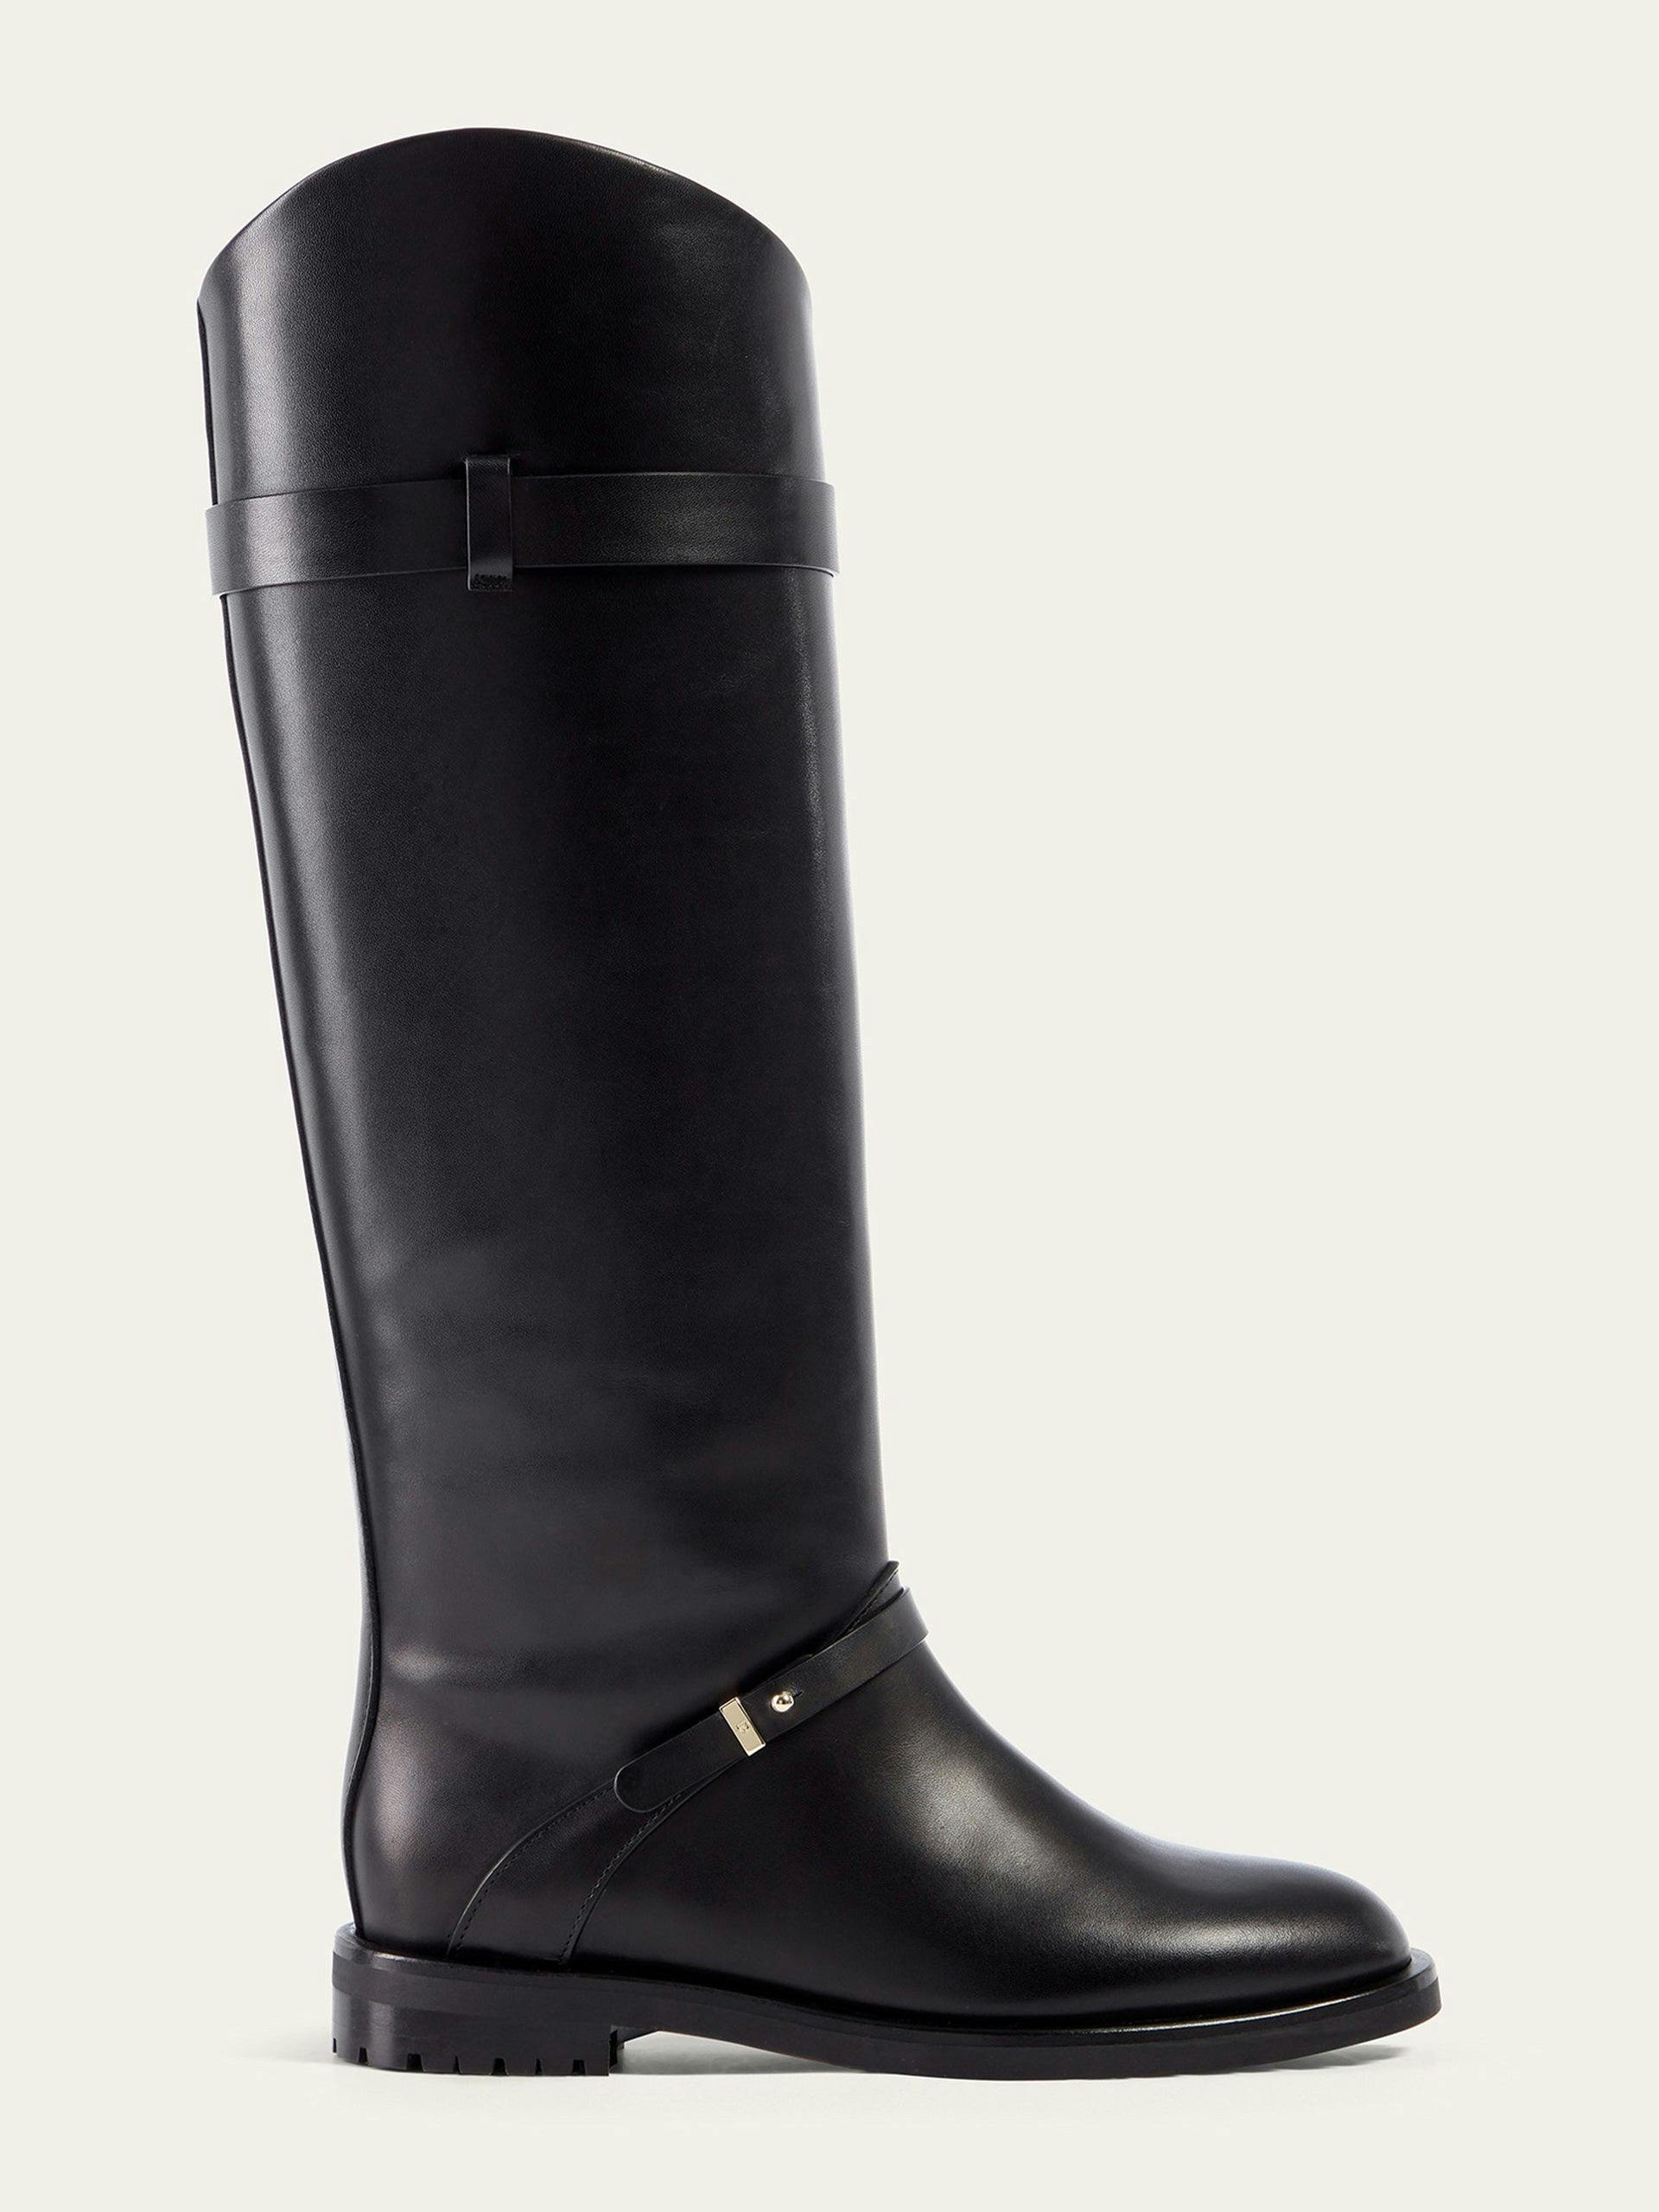 Saddle black boot